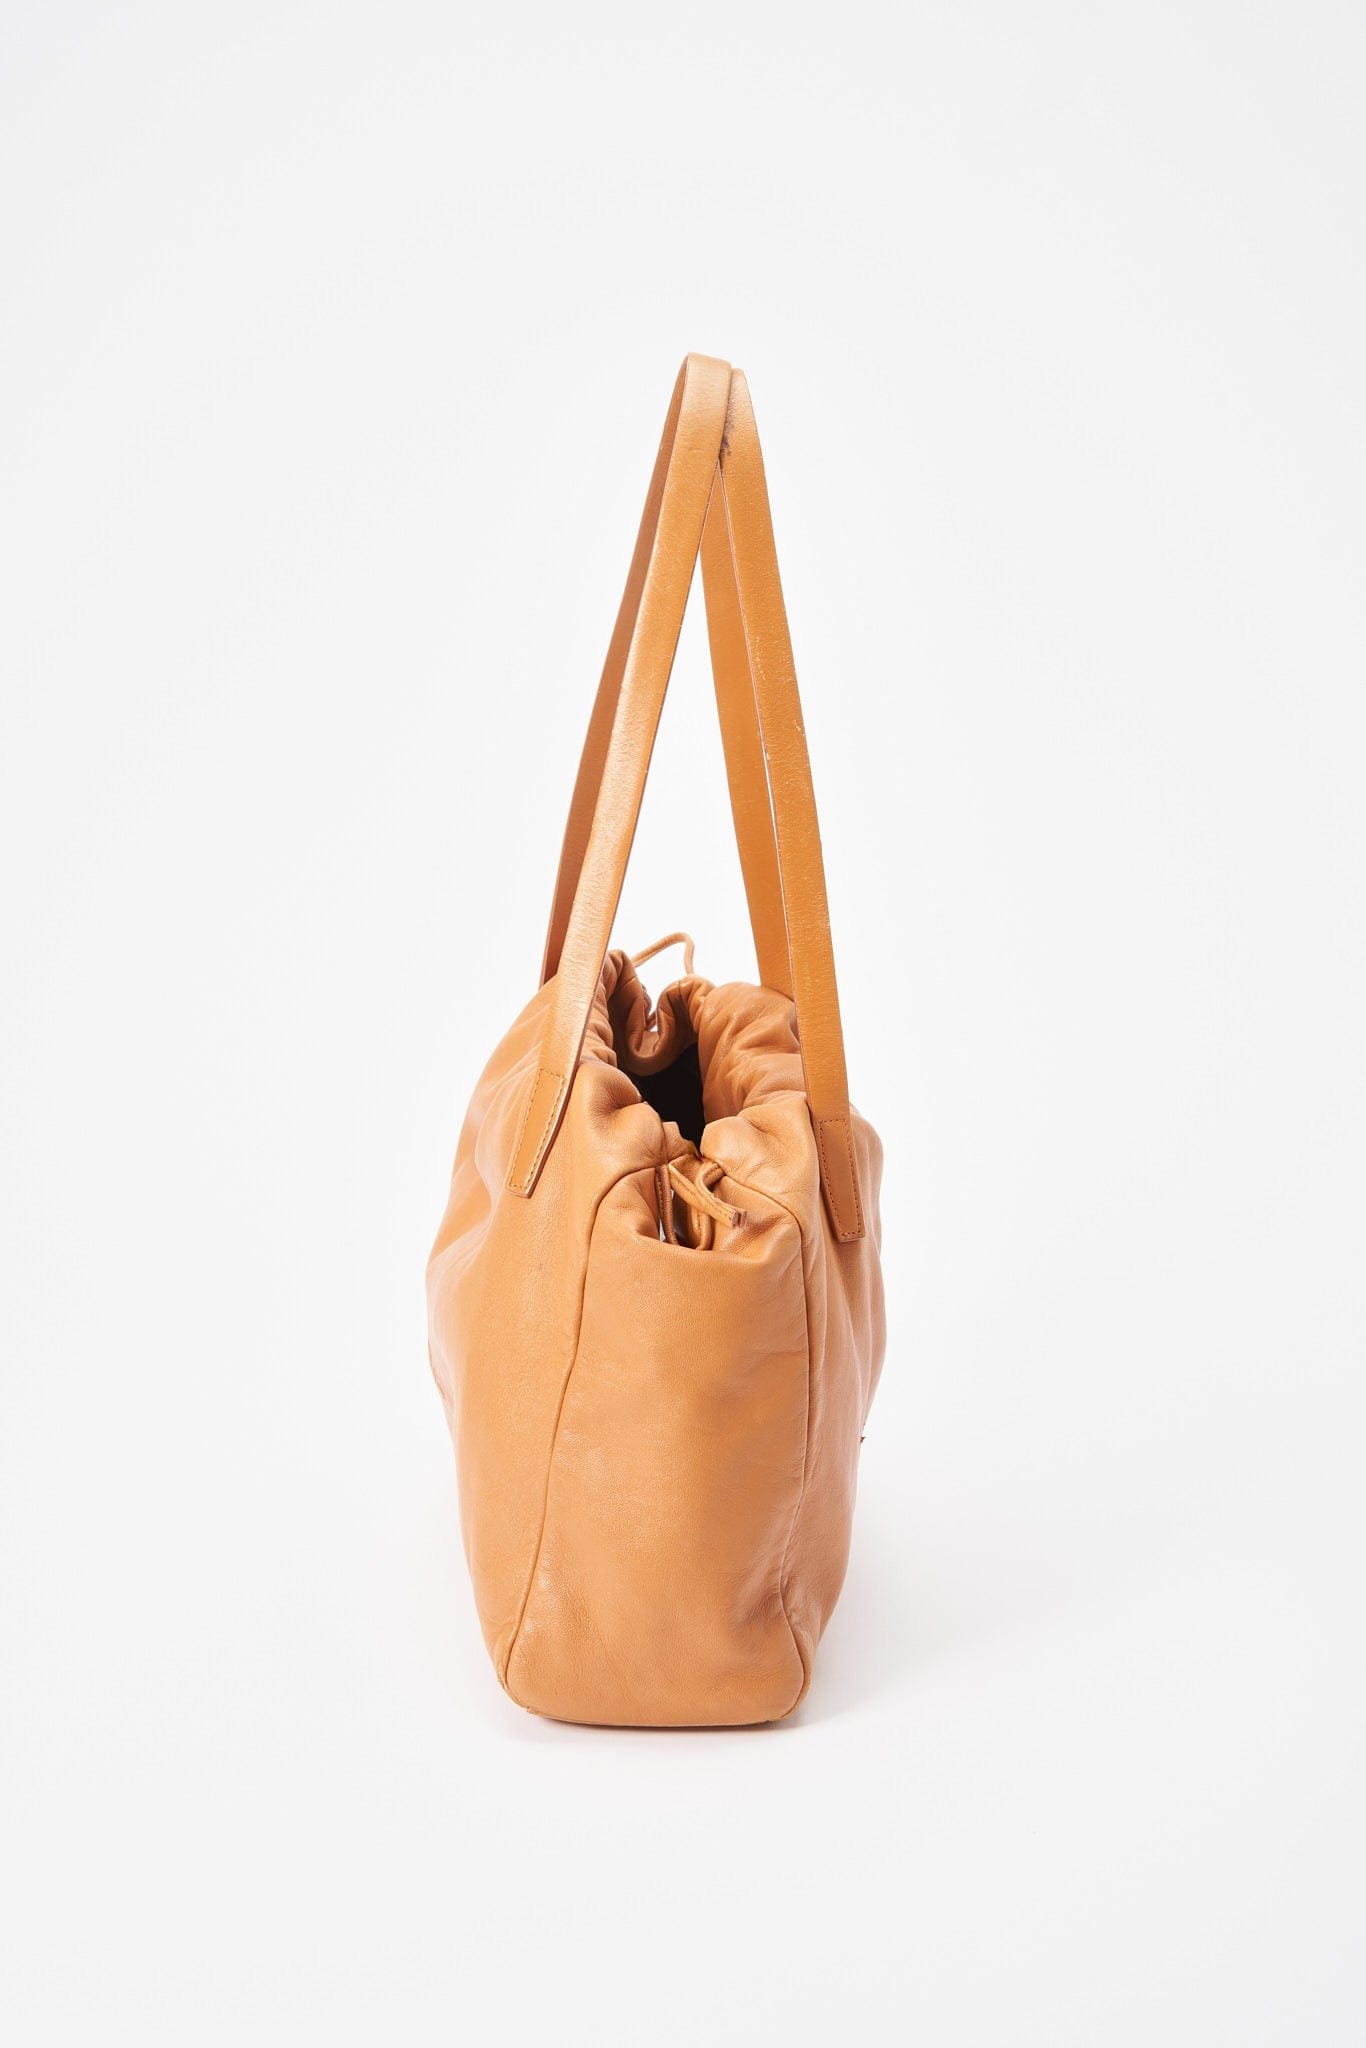 Loewe - Authenticated Anagram Handbag - Leather Camel Plain for Women, Never Worn